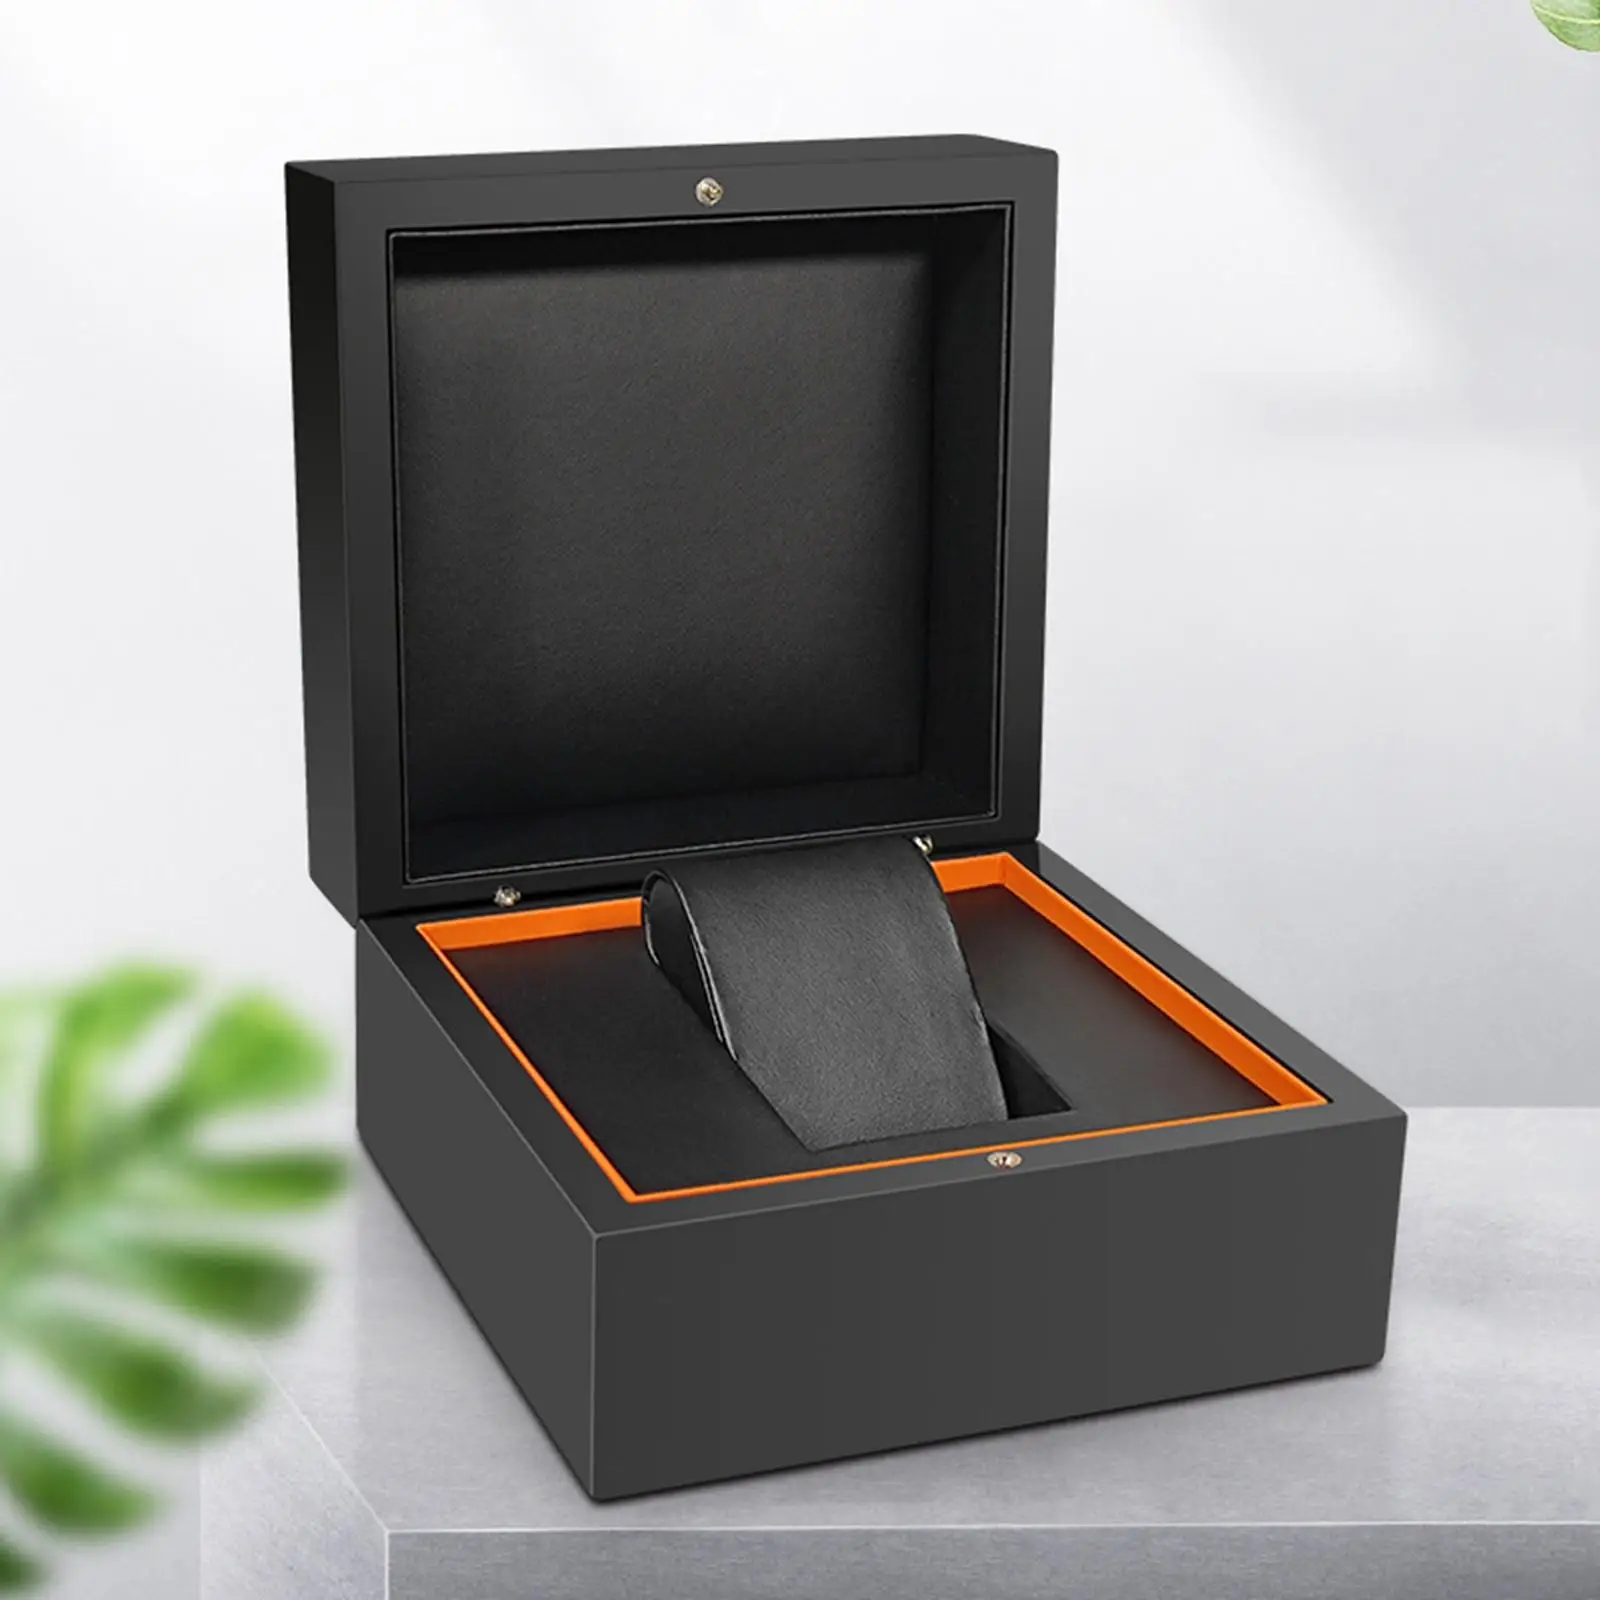 Portable Watch Display Case Storage Holder Wood Organizer Decoration Single Slot for Bracelets Birthday Gifts Women Men Travel